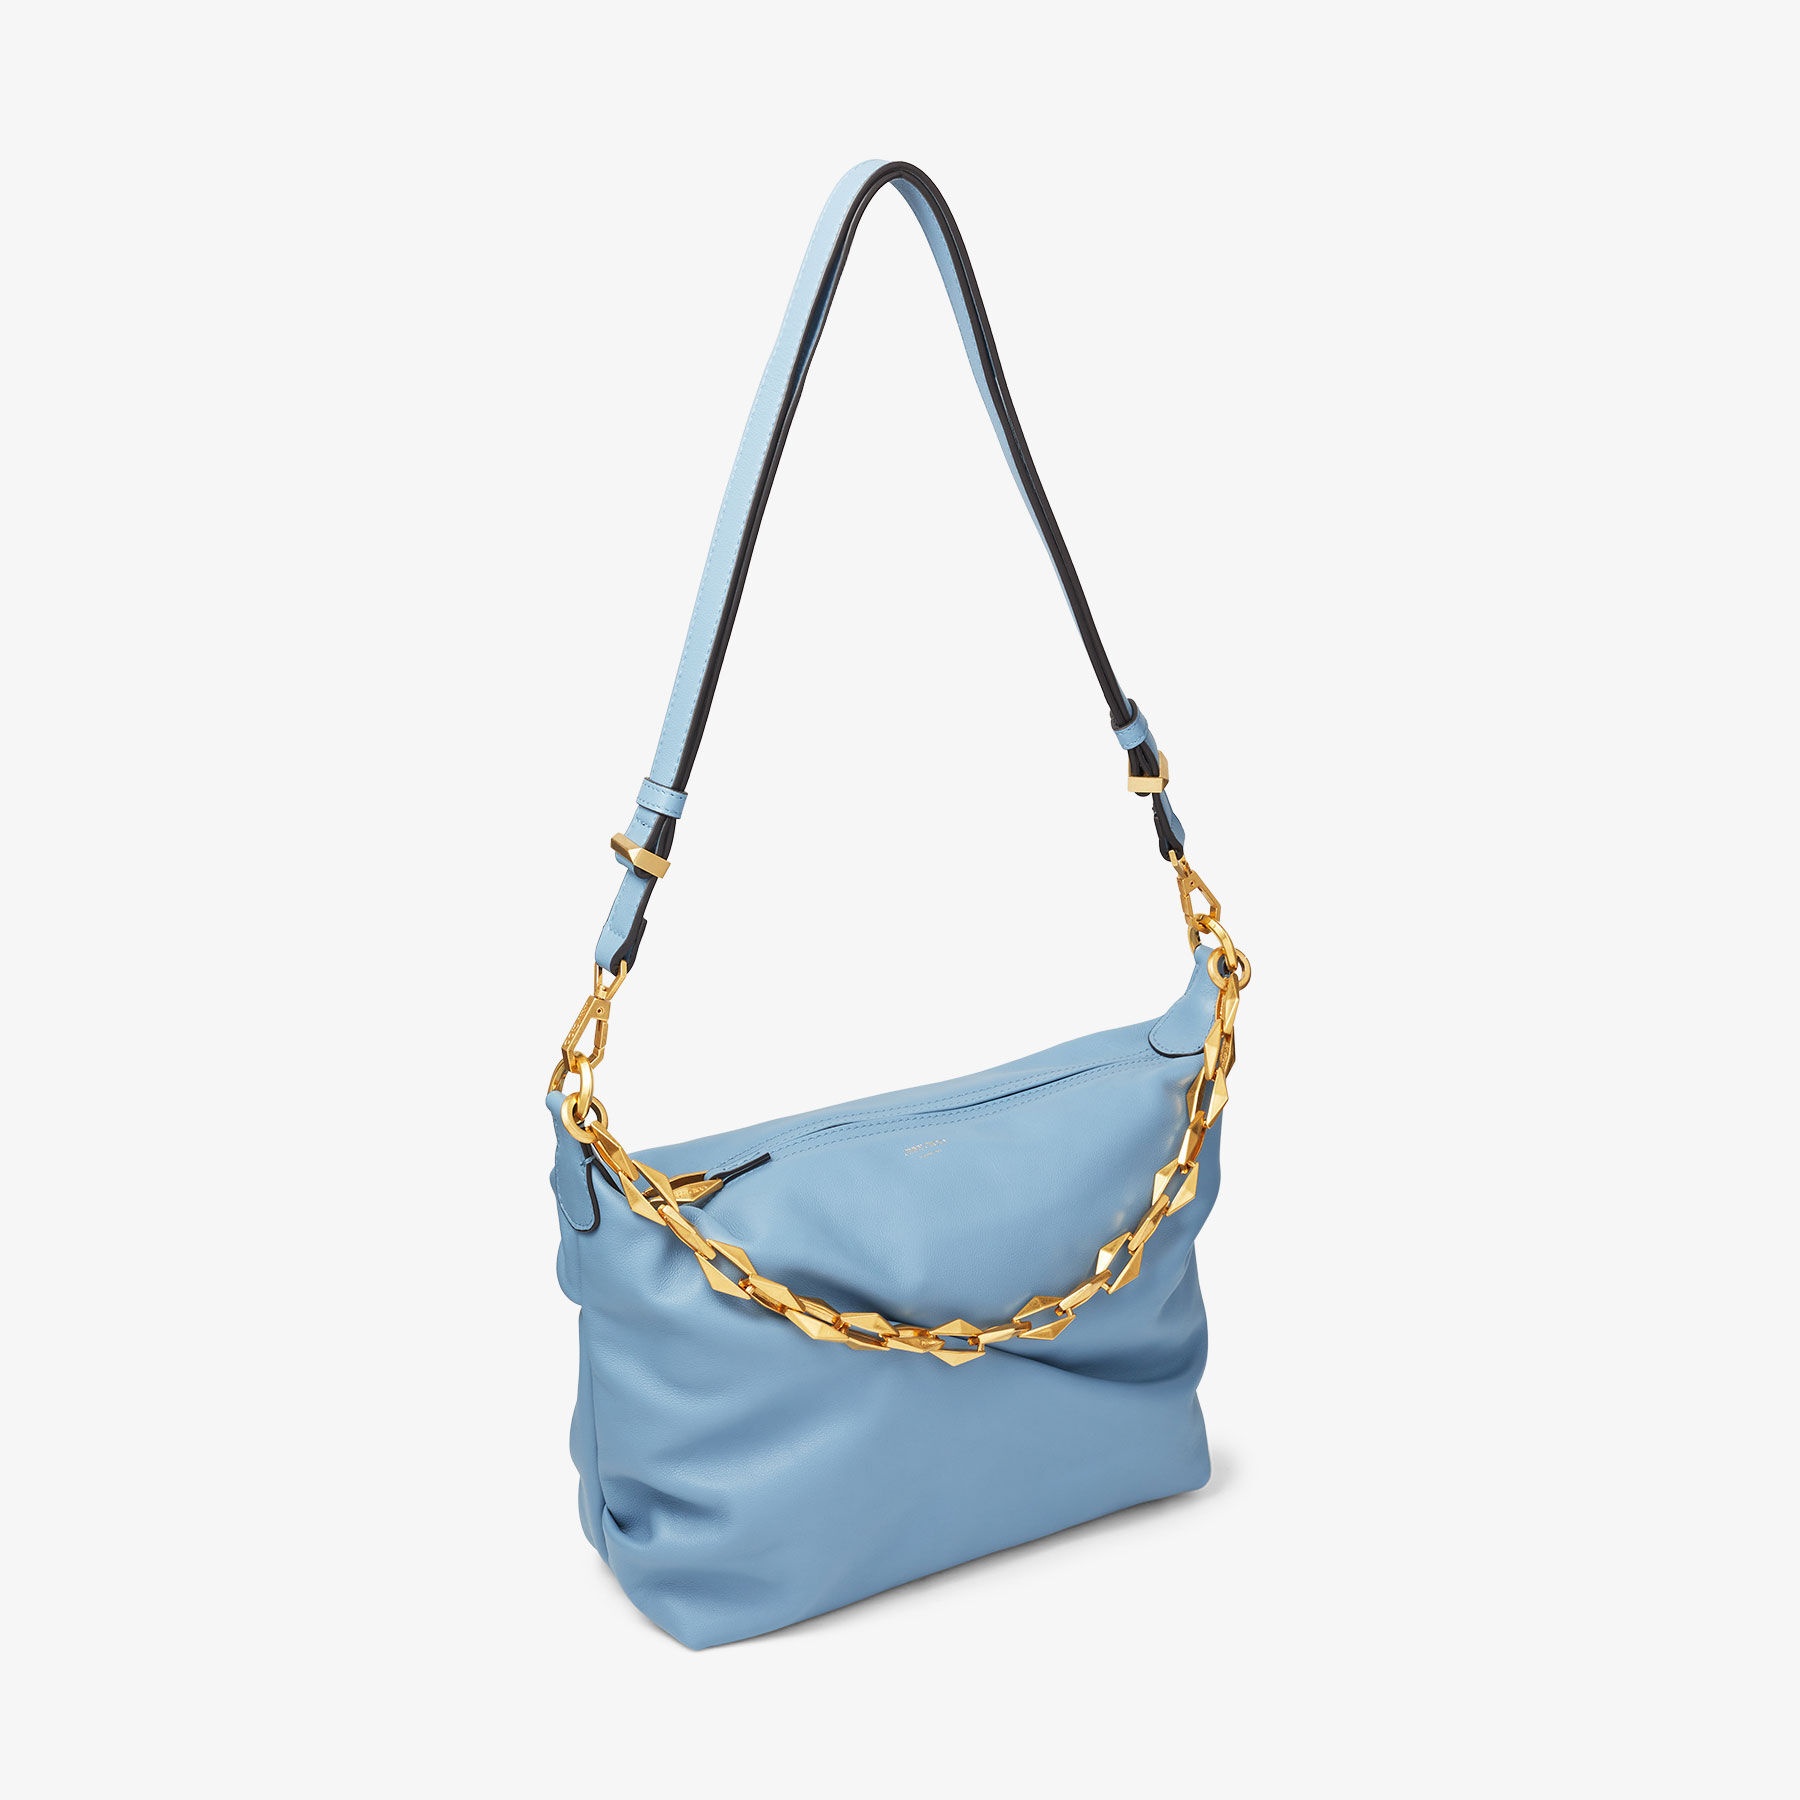 Diamond Soft Hobo S
Smoky Blue Soft Calf Leather Hobo Bag with Chain Strap - 3